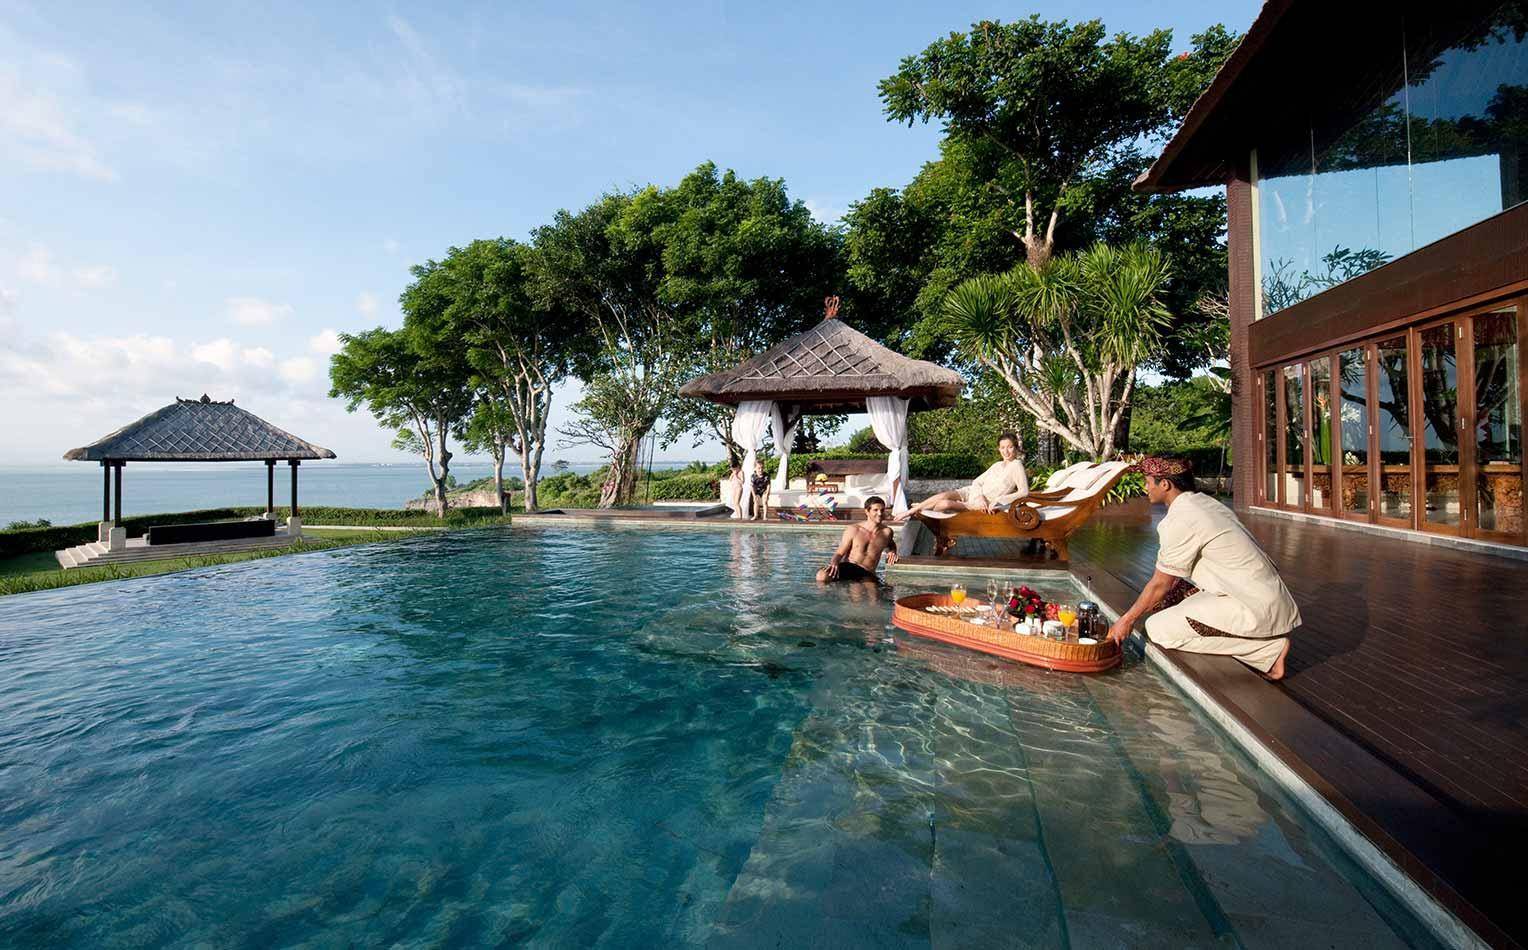 Maya sanur resort & spa 5* - индонезия, бали - отели | пегас туристик